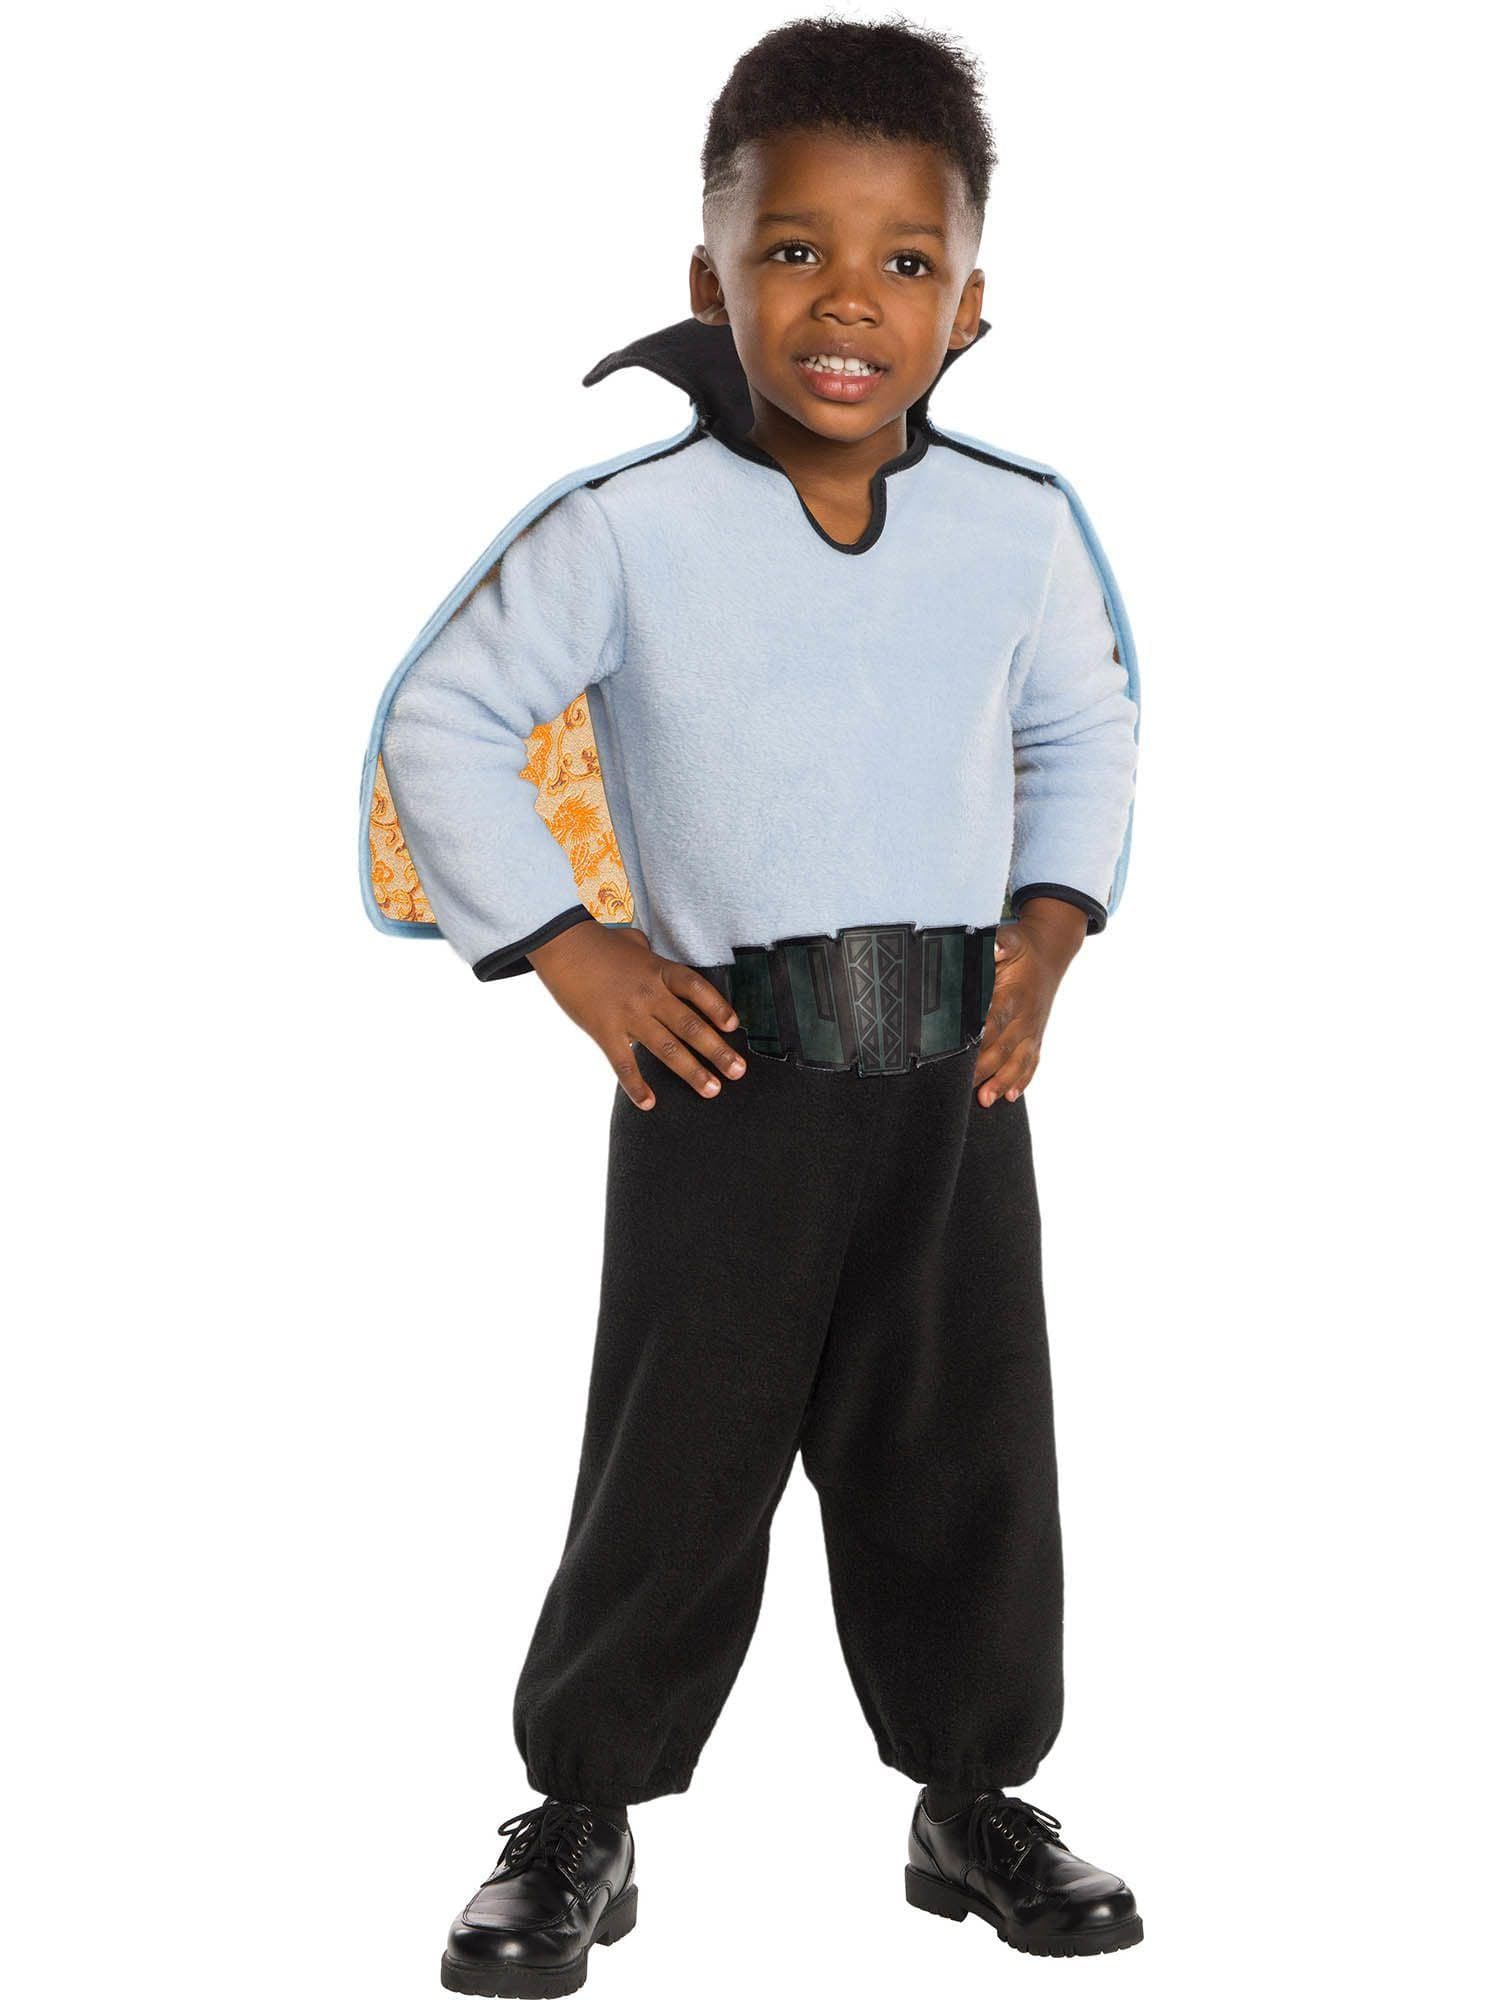 Baby/Toddler Classic Star Wars Lando Calrissian Costume - costumes.com